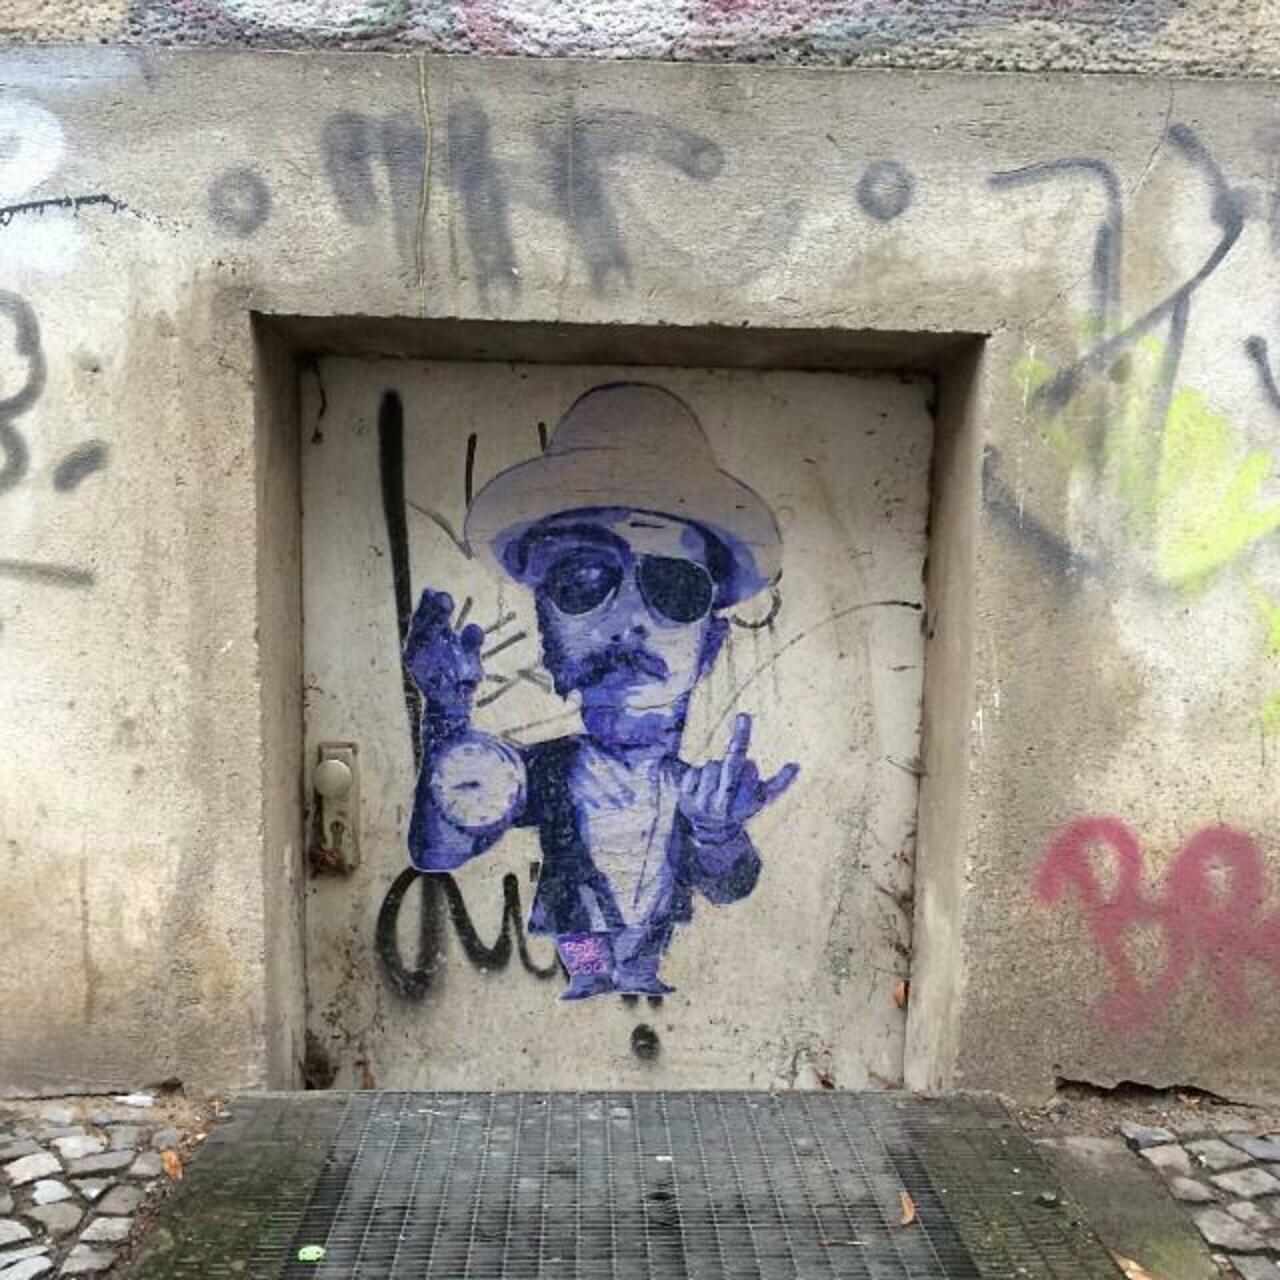 #Berlin #Allemagne #streetart #street #art #urbanart #urbantag #graffiti #streetartberlin by becombegeek http://t.co/ESK2cdUYSt